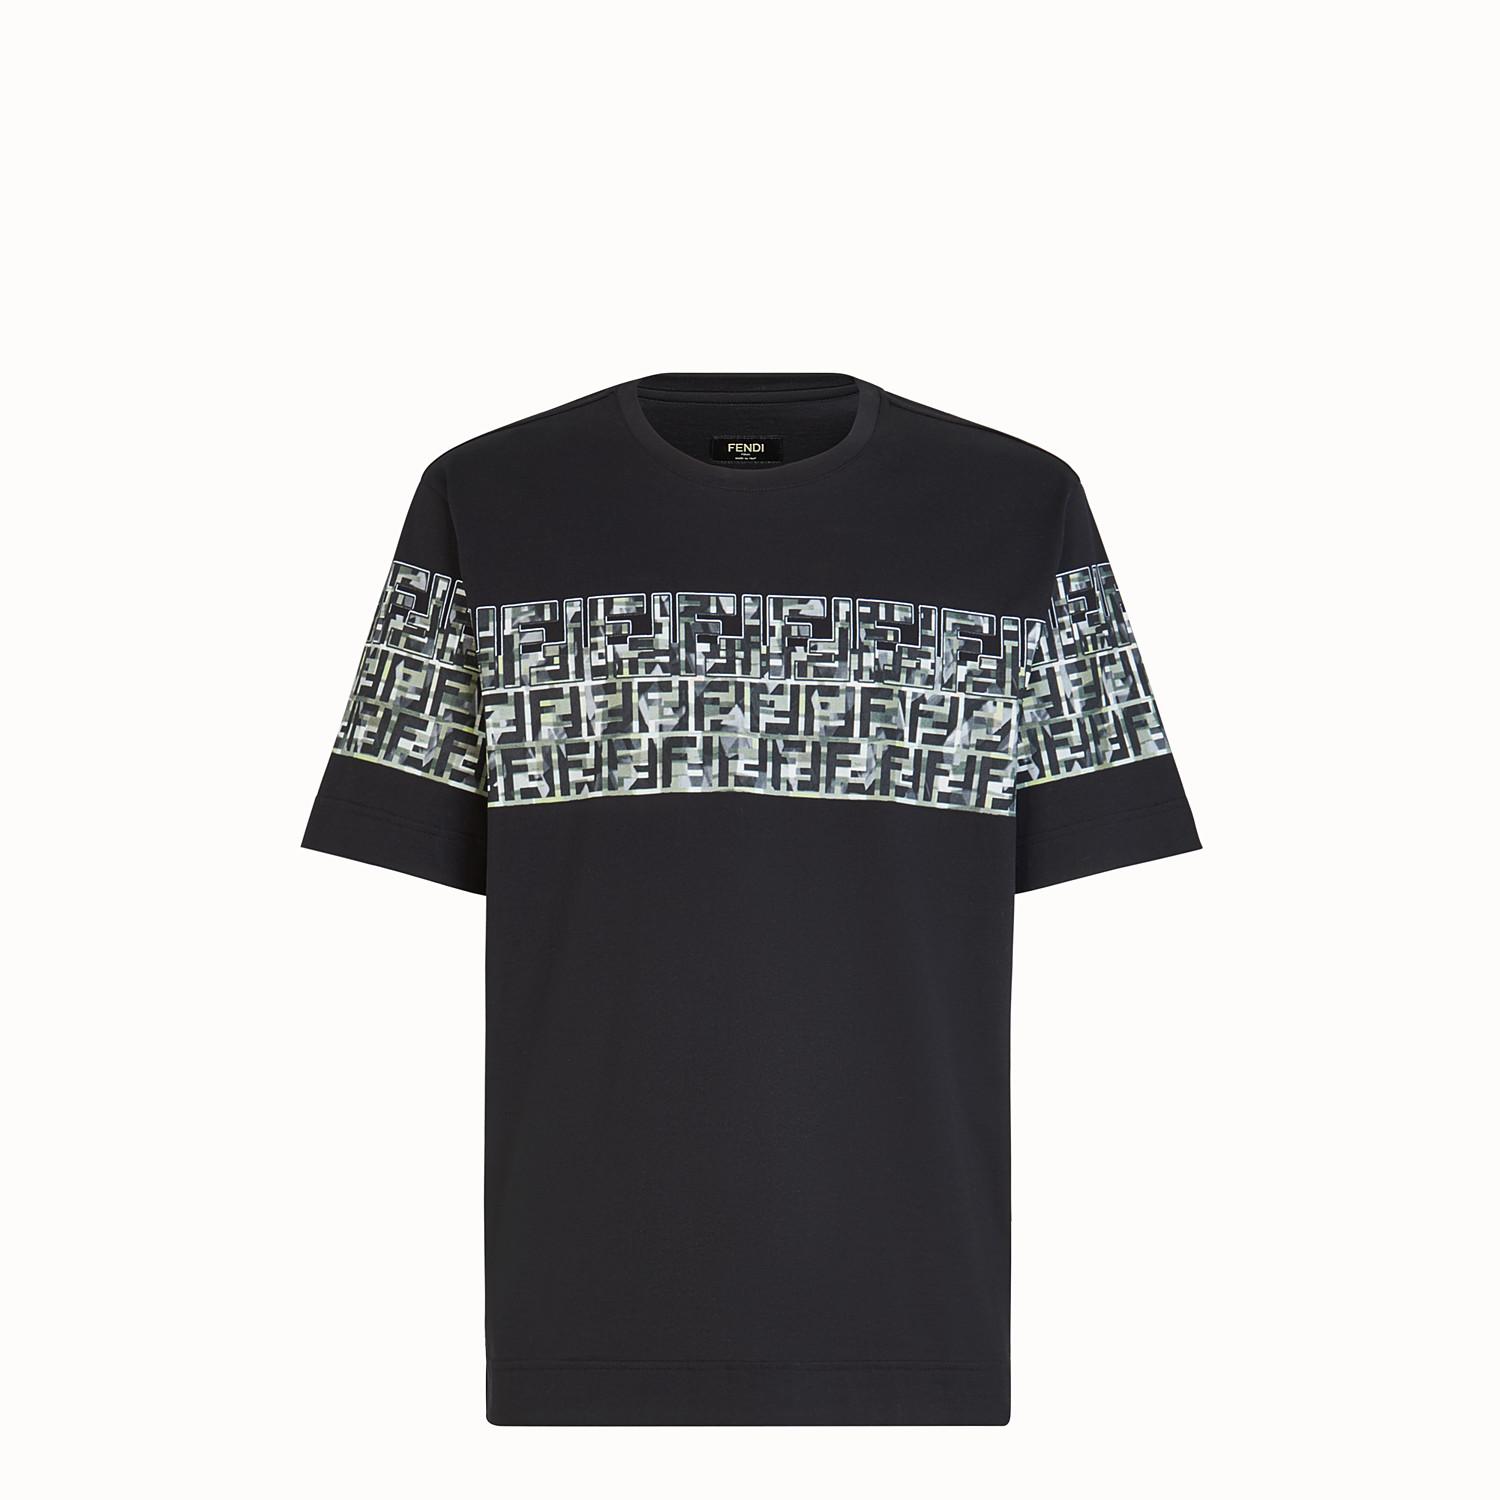 Fendi Cotton Monogram Panel T-shirt in Black for Men - Save 20% - Lyst